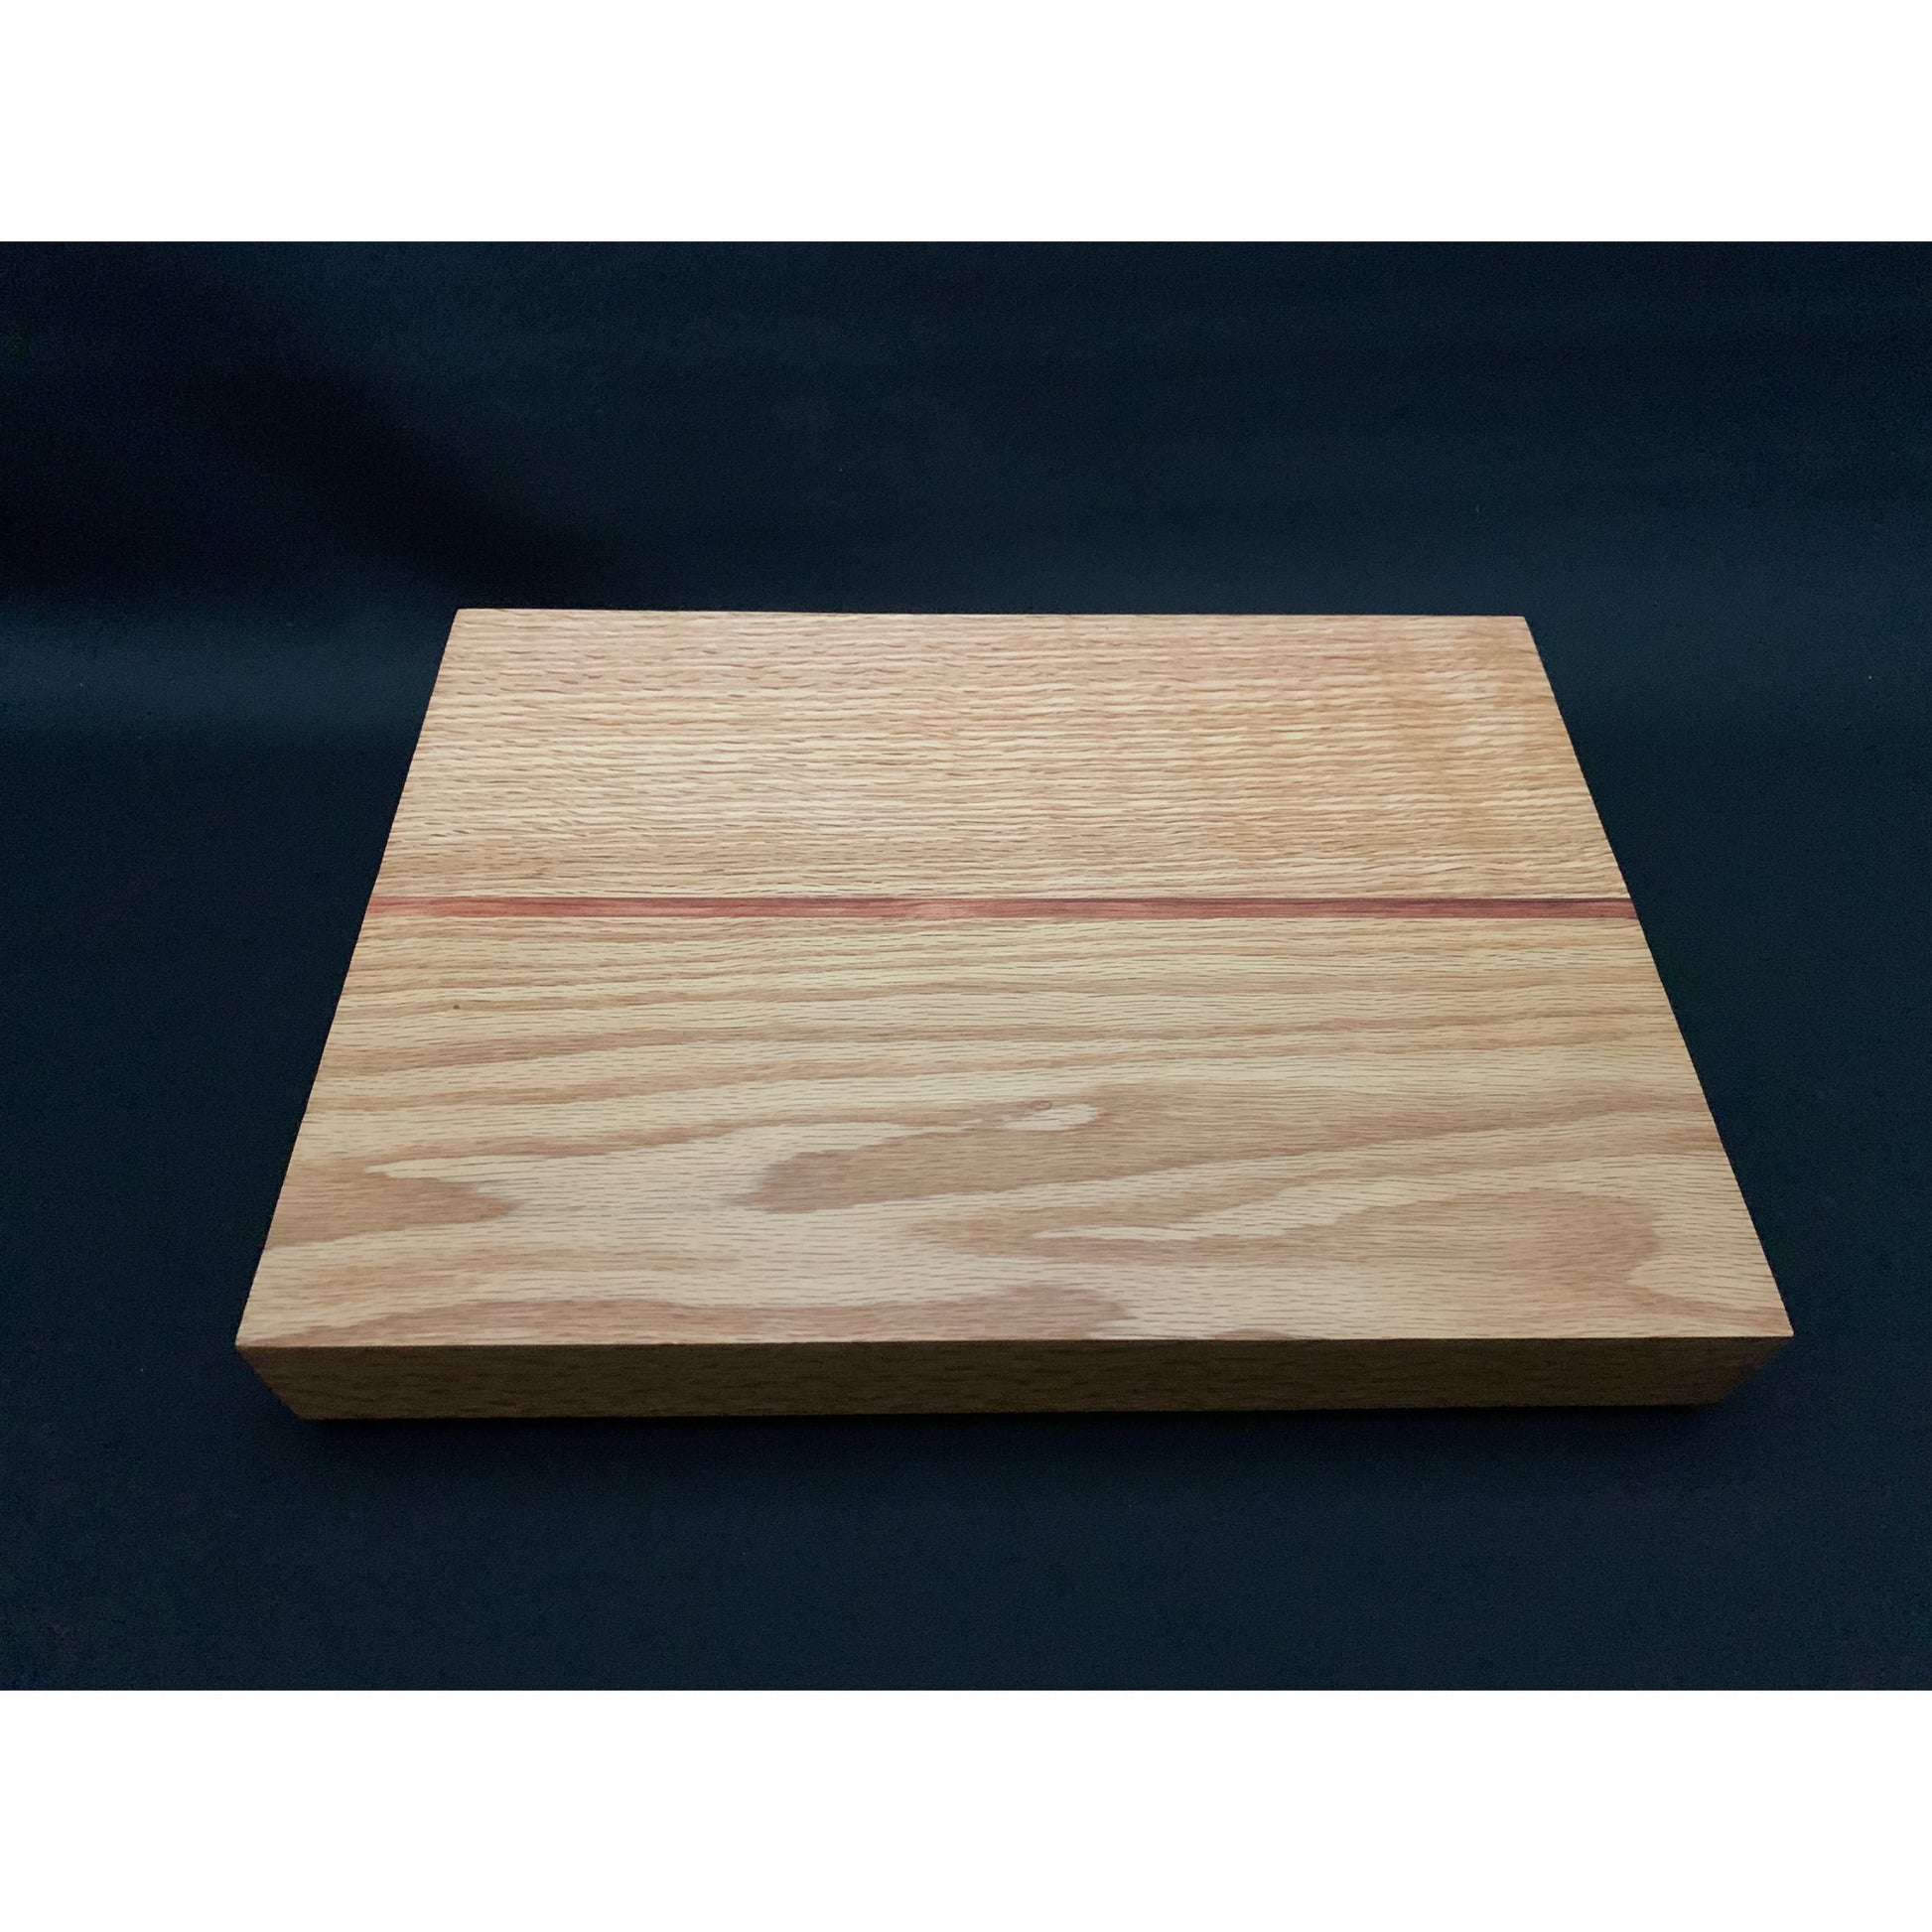 Serving Tray Cutting Board Non-slip Hardwood